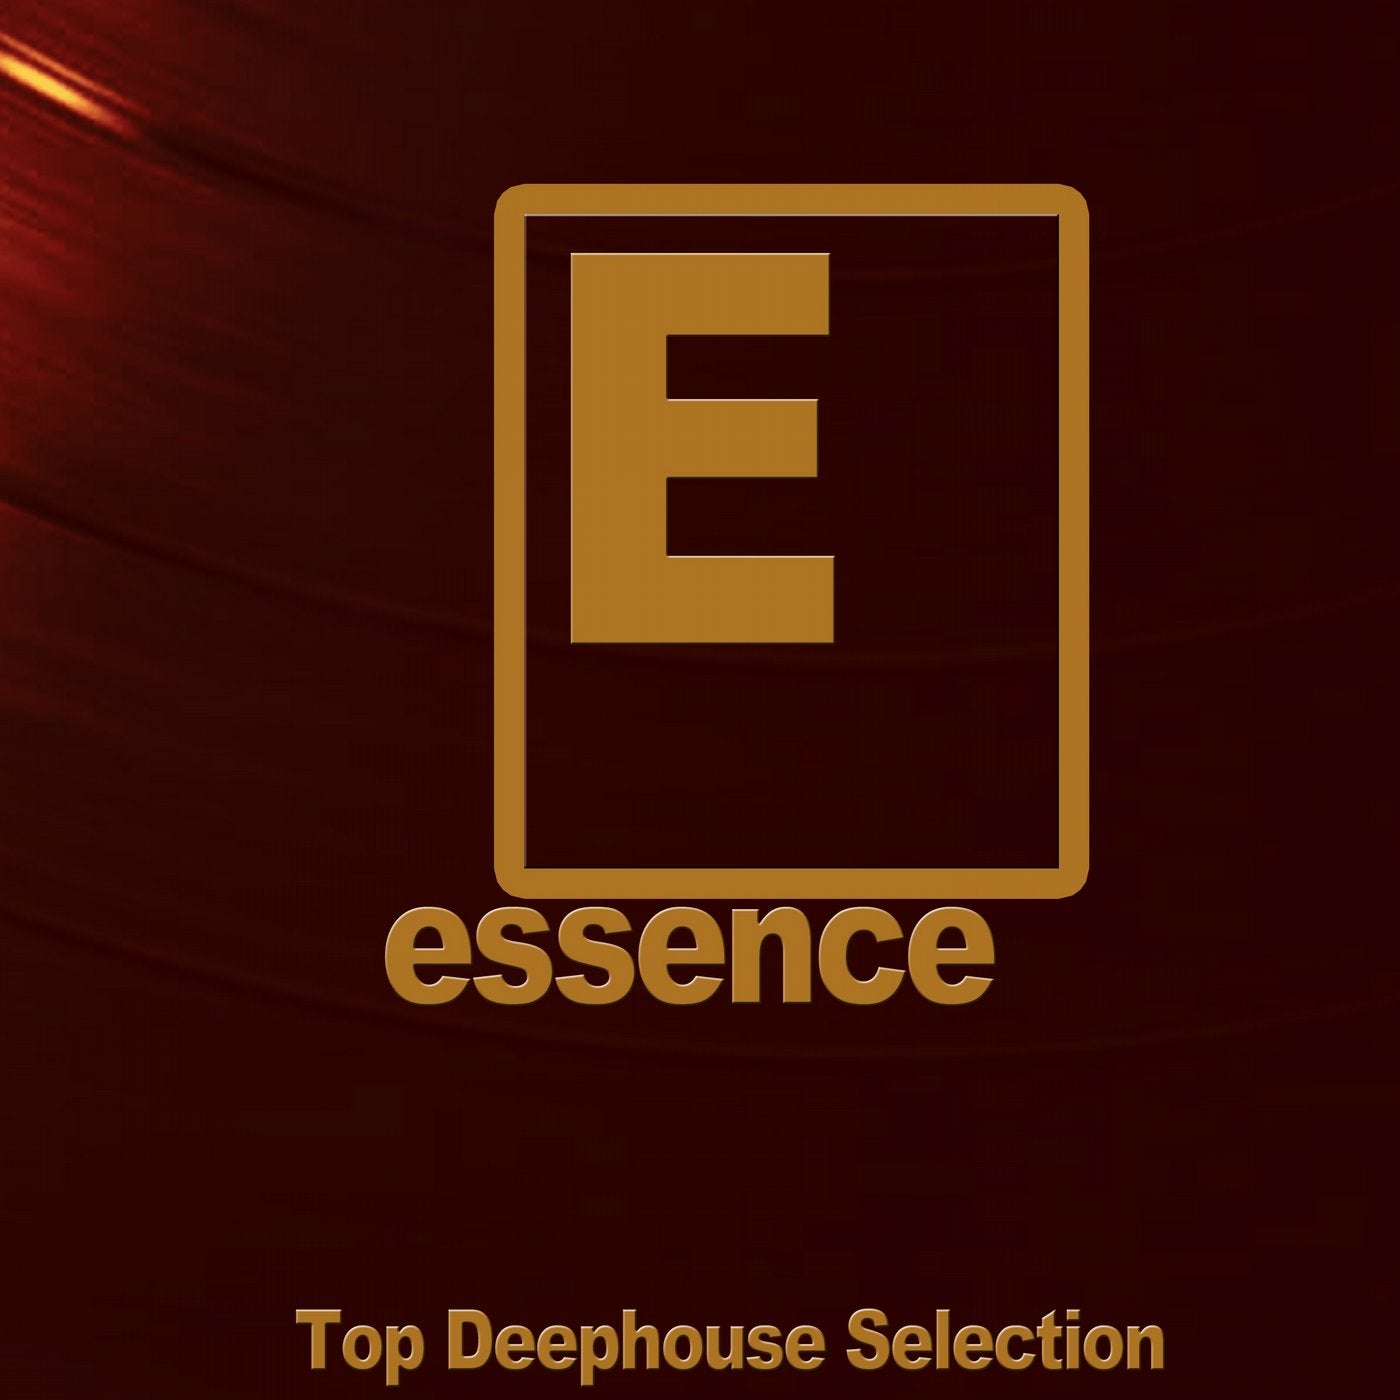 Essence (Top Deephouse Selection)